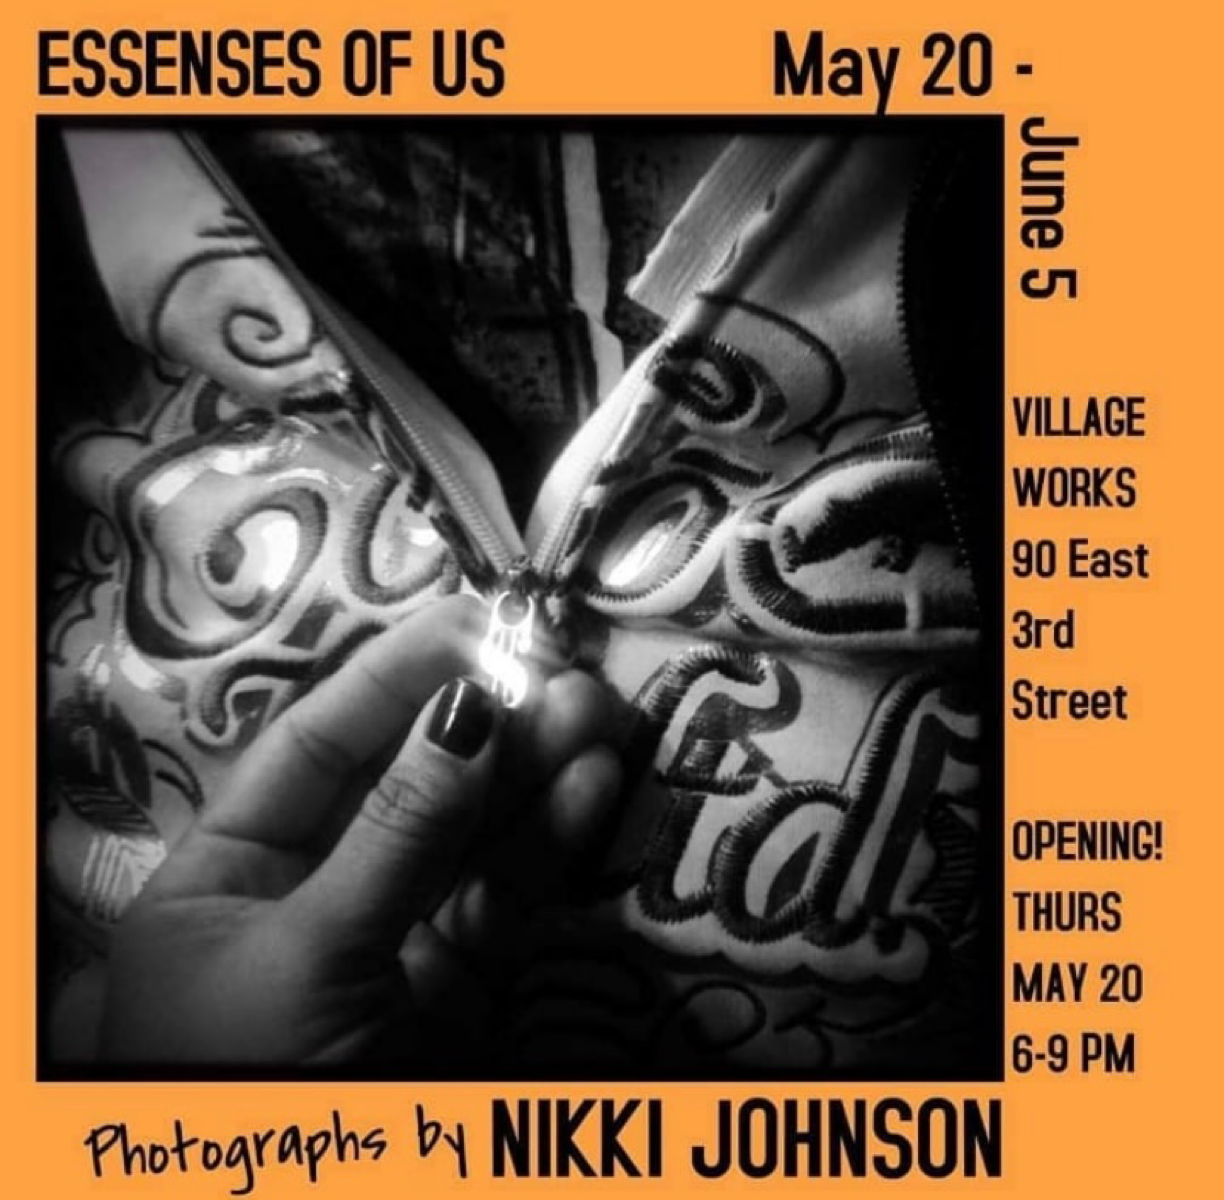 "Essences of Us: Photographs by Nikki Johnson